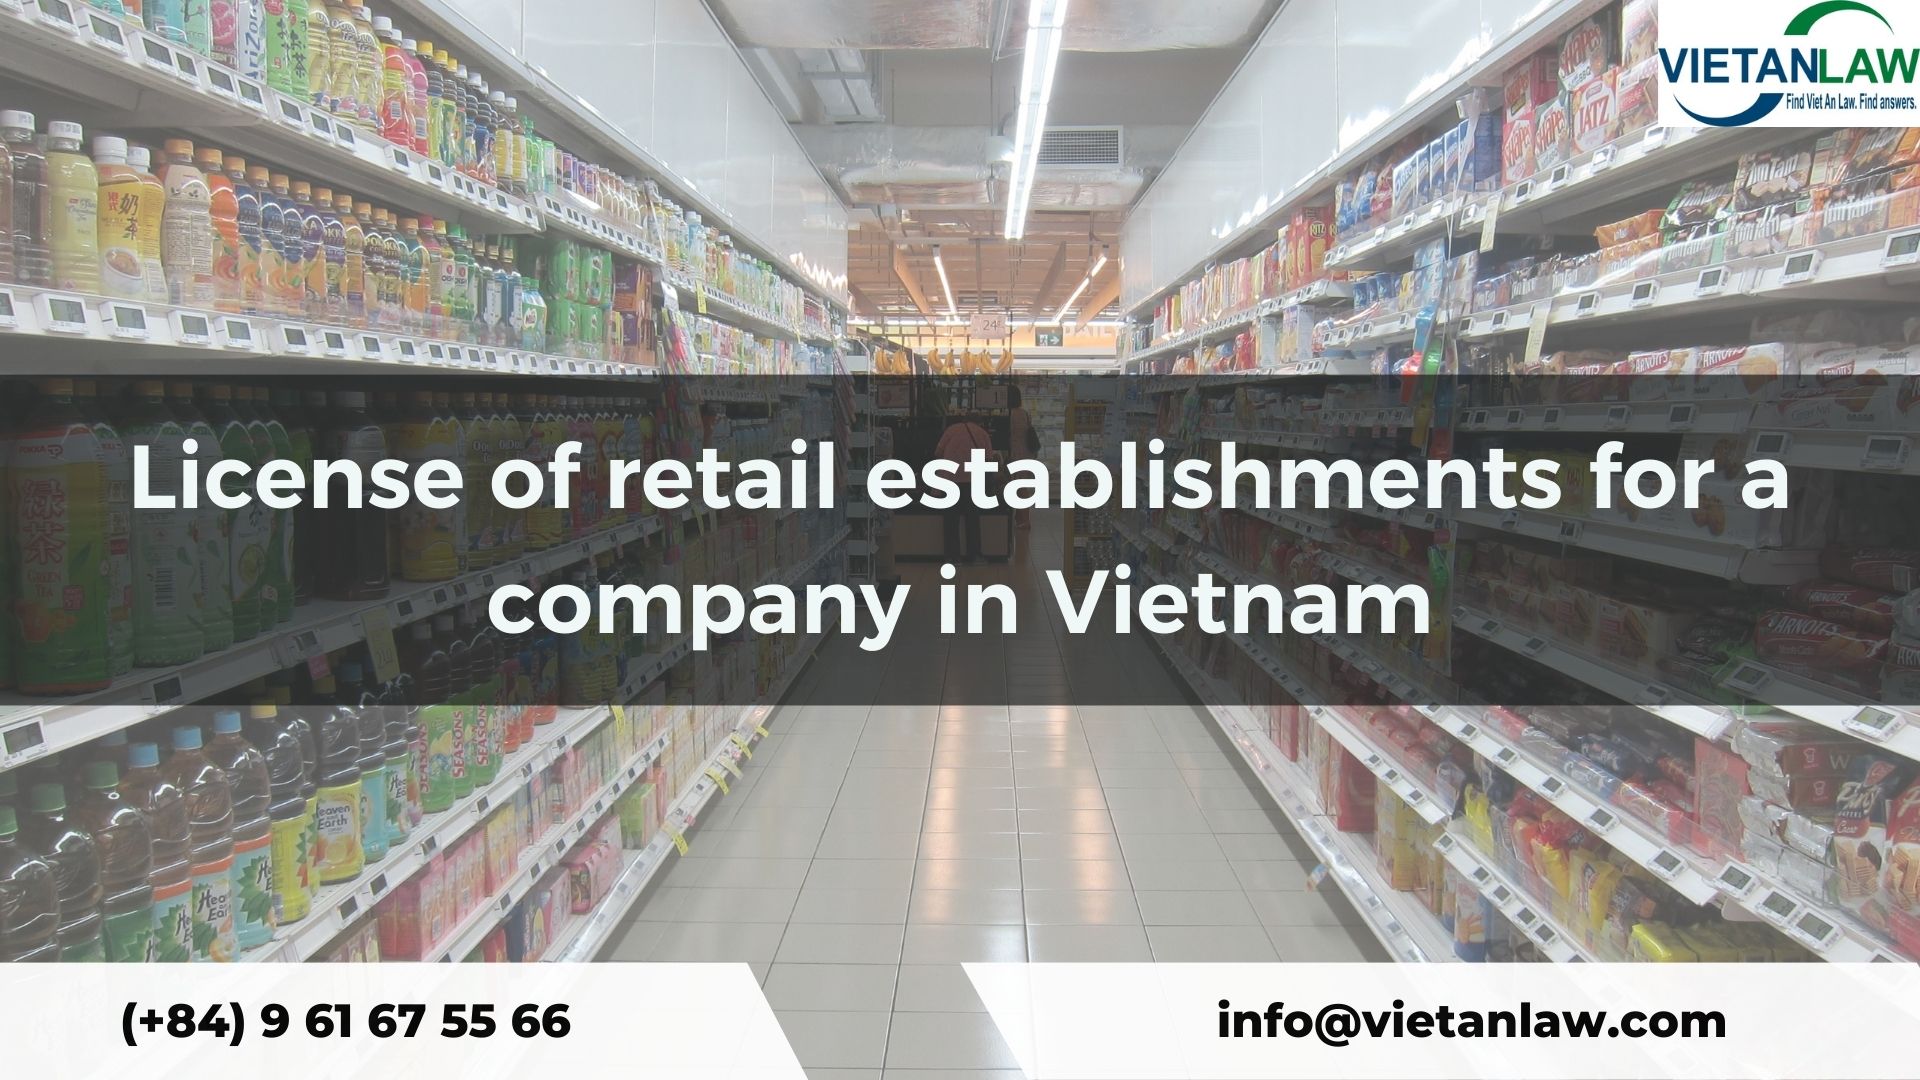 License of retail establishments for a company in Vietnam